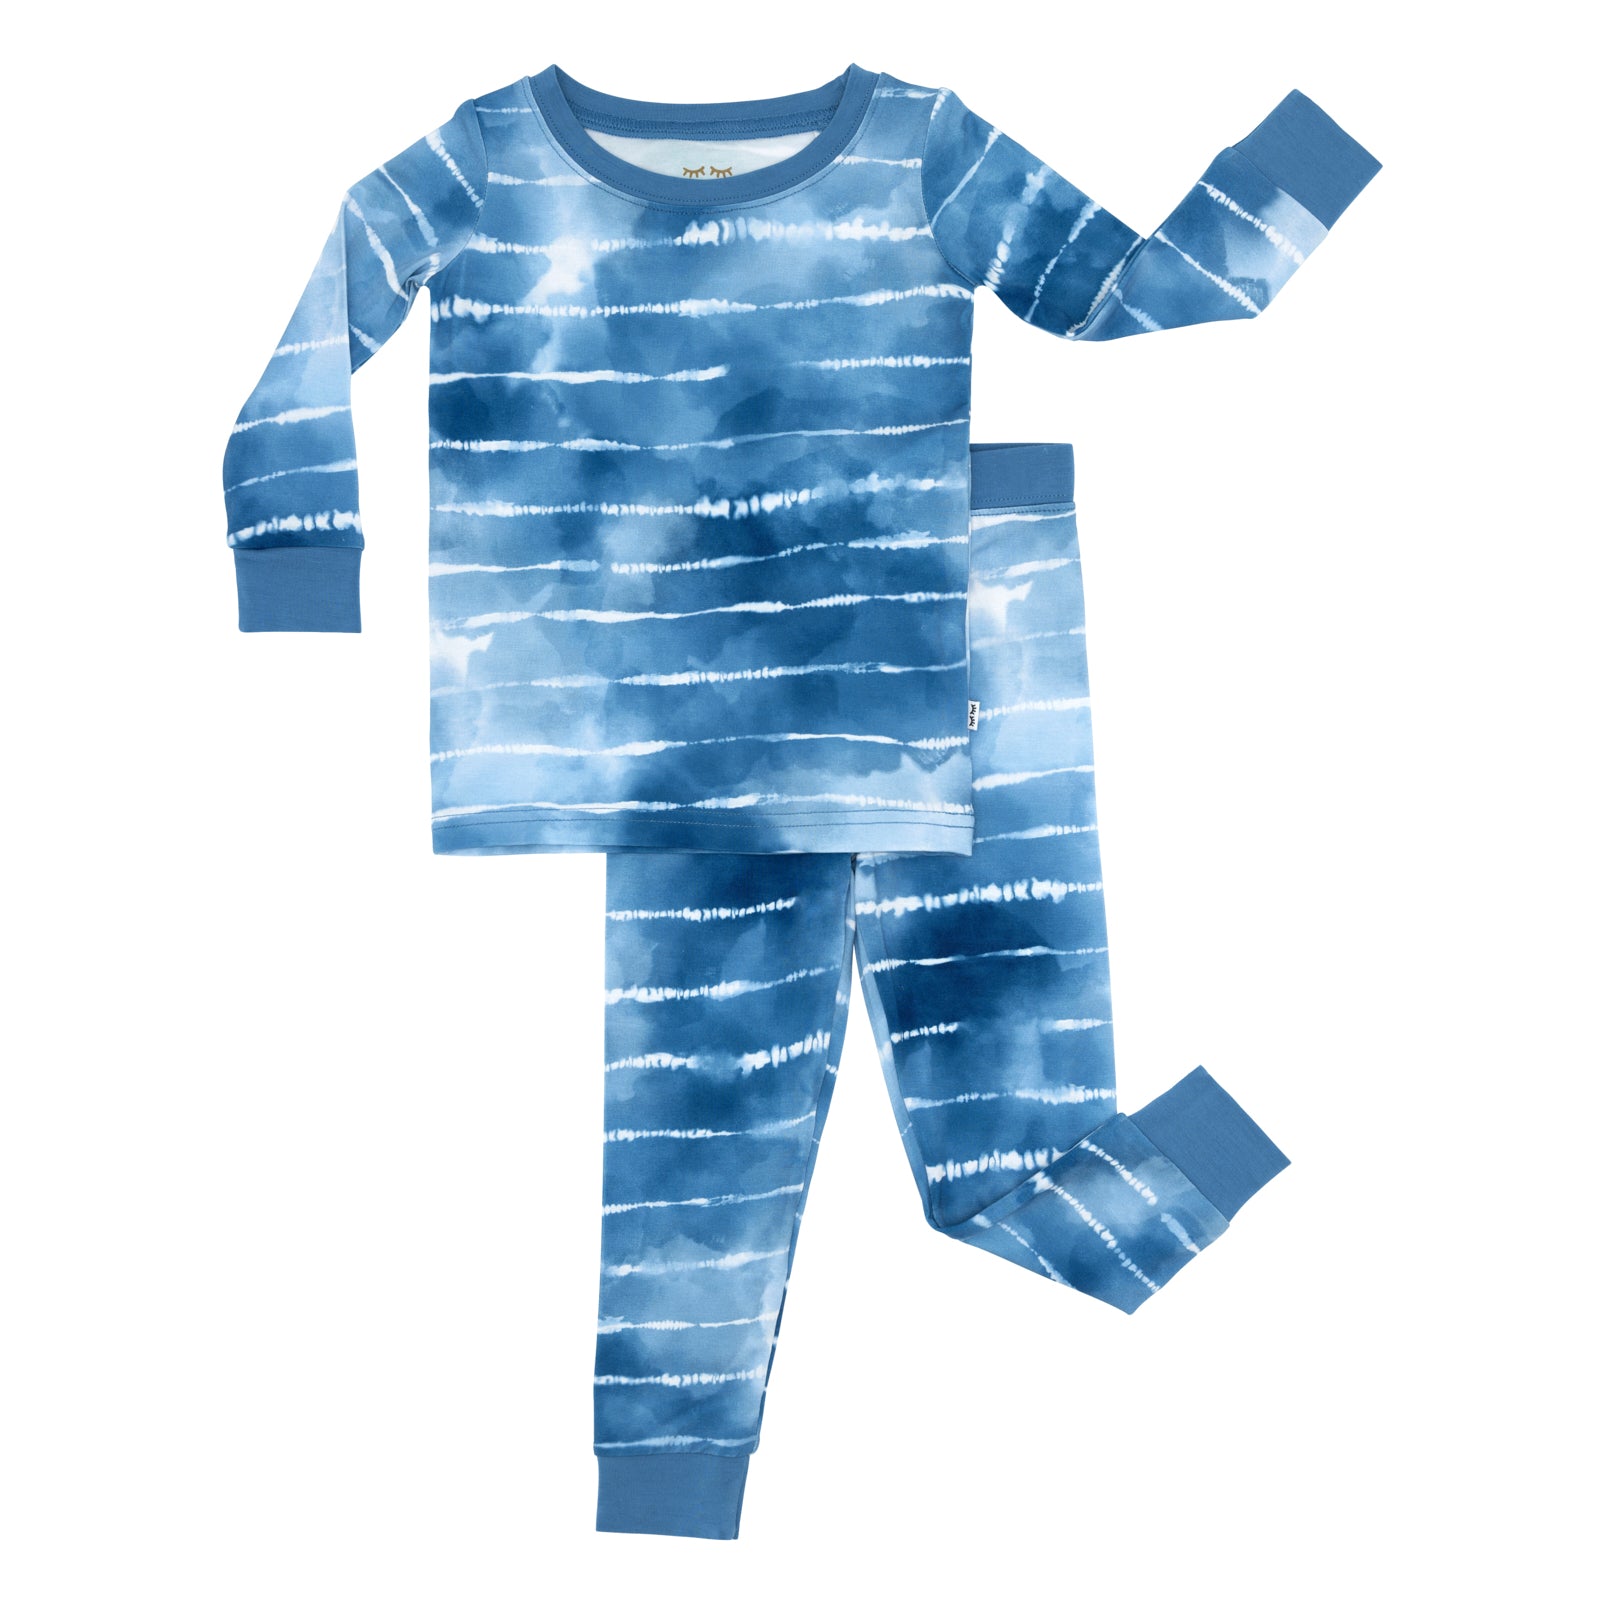 Flat lay image of a Blue Tie Dye Dreams two-piece pajama set